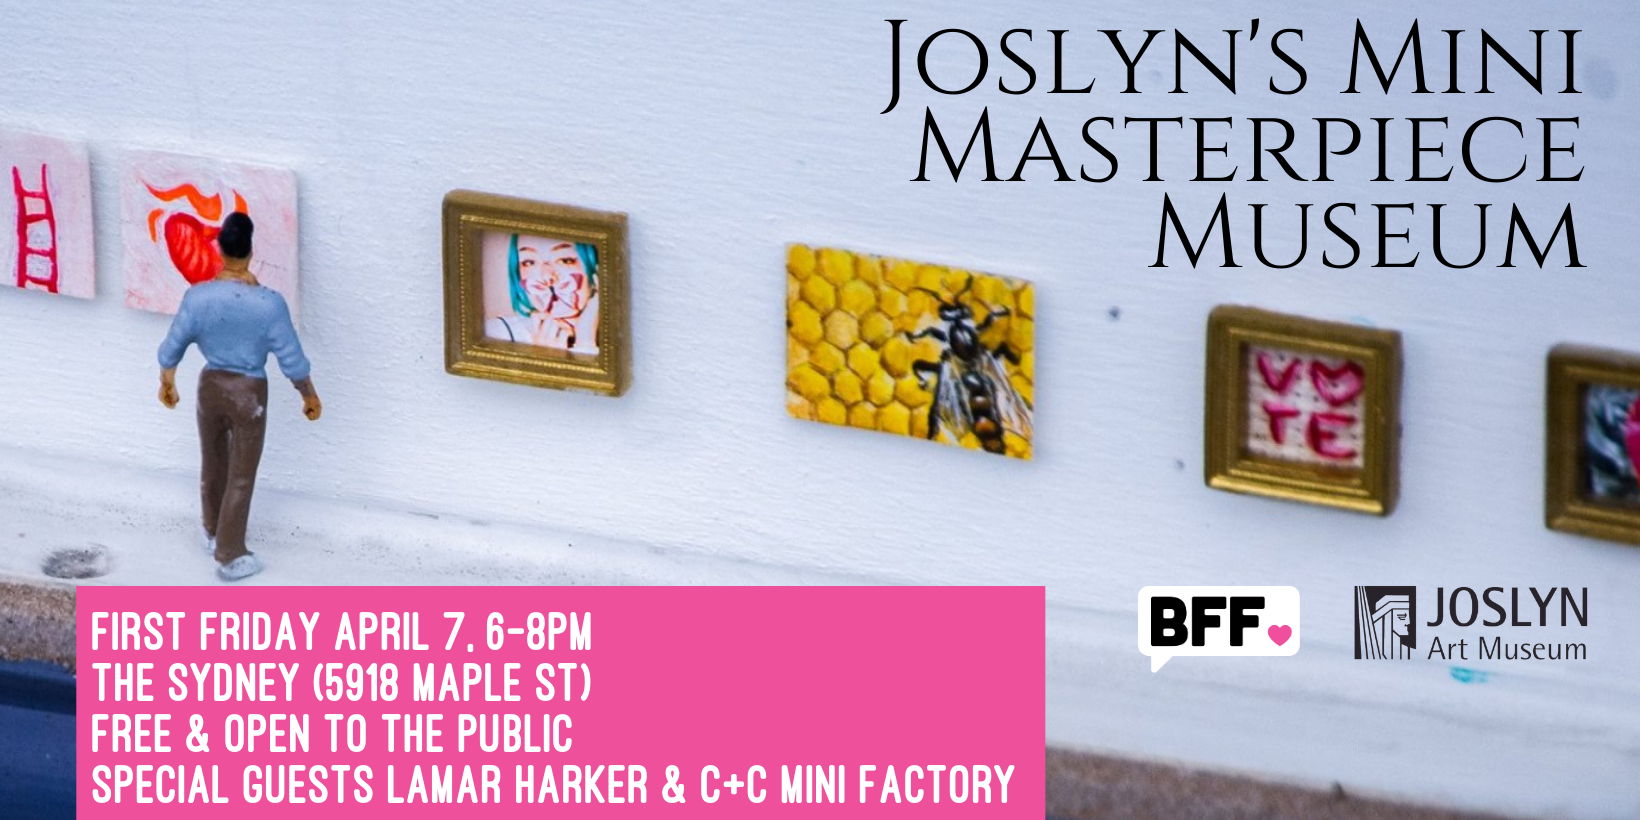 Joslyn's Mini Masterpiece Museum promotional image